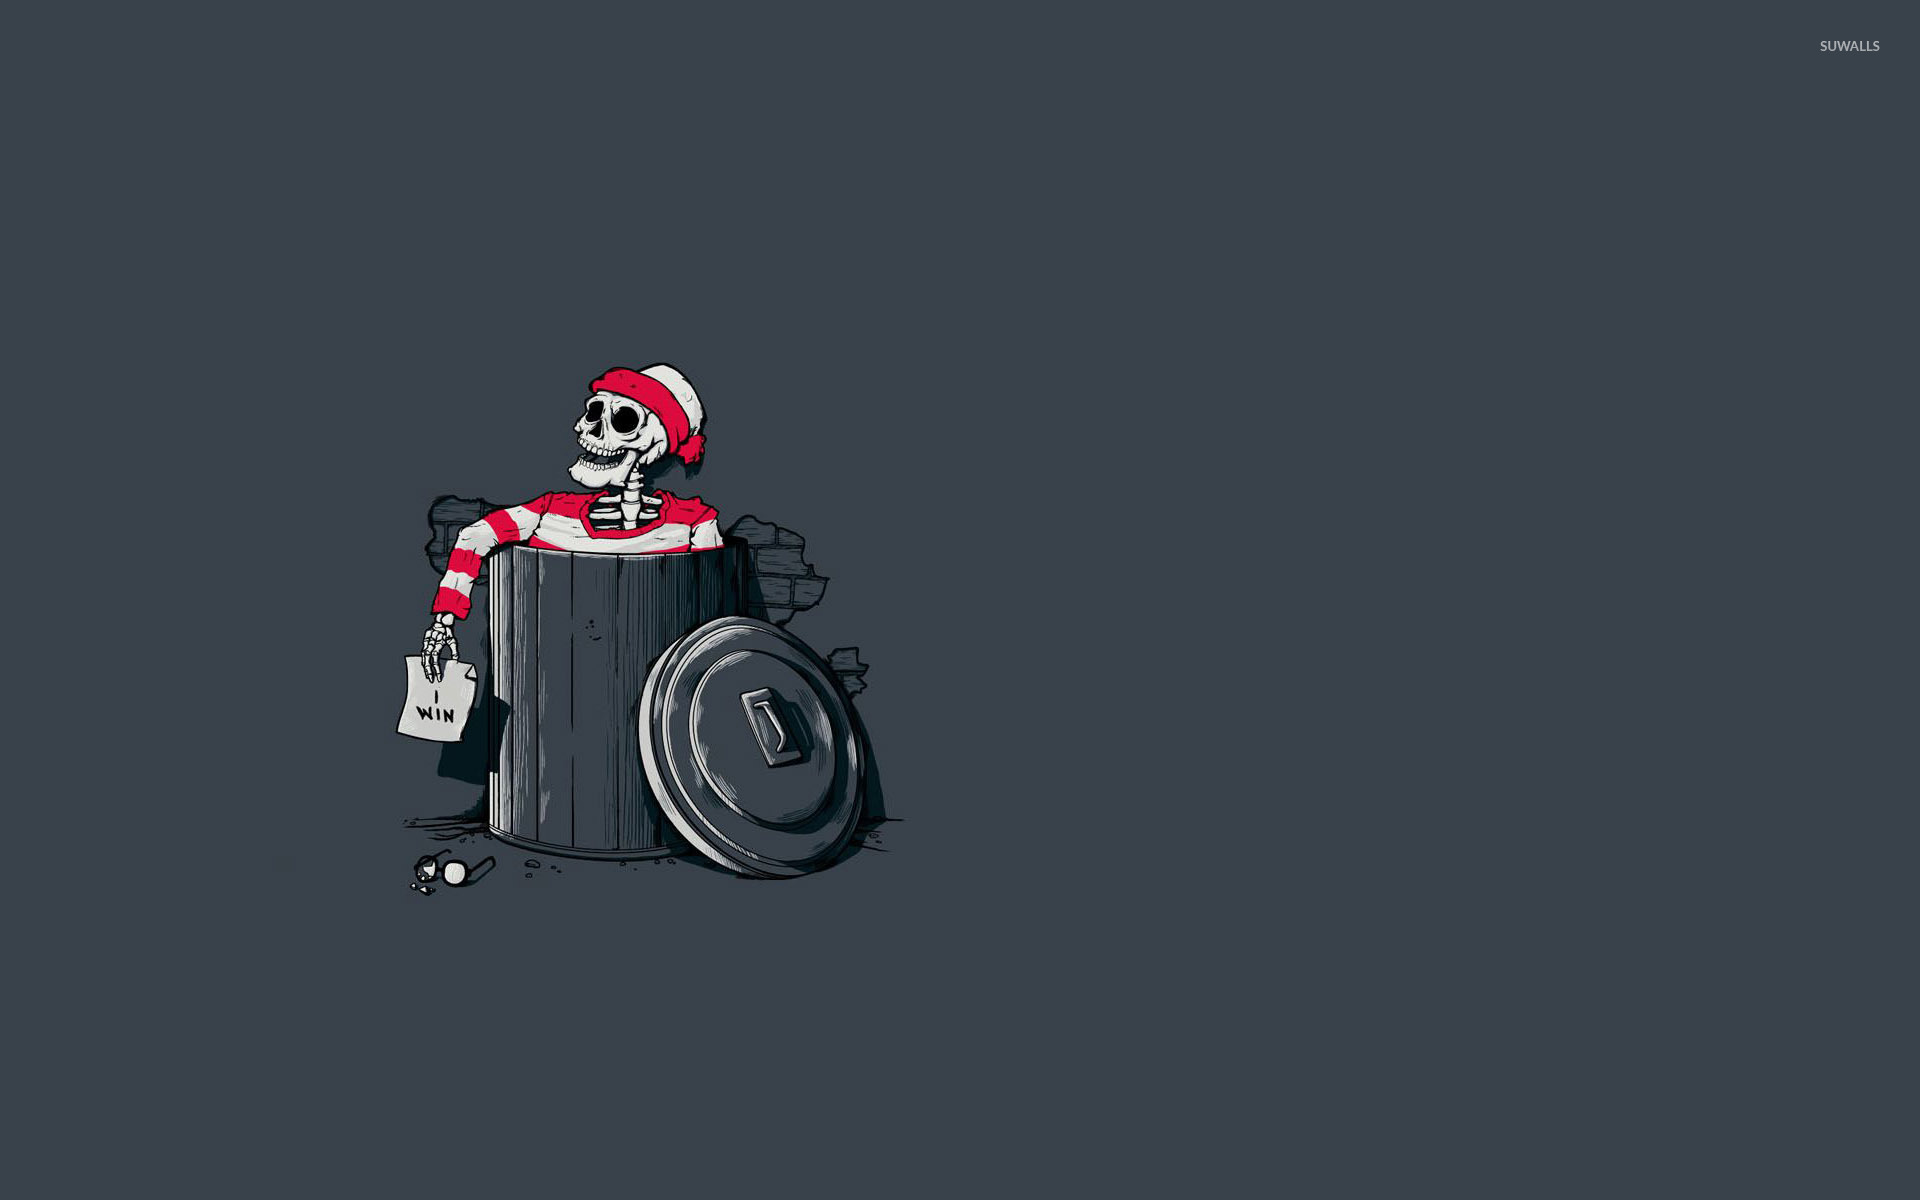 Waldo Wins Wallpaper Funny